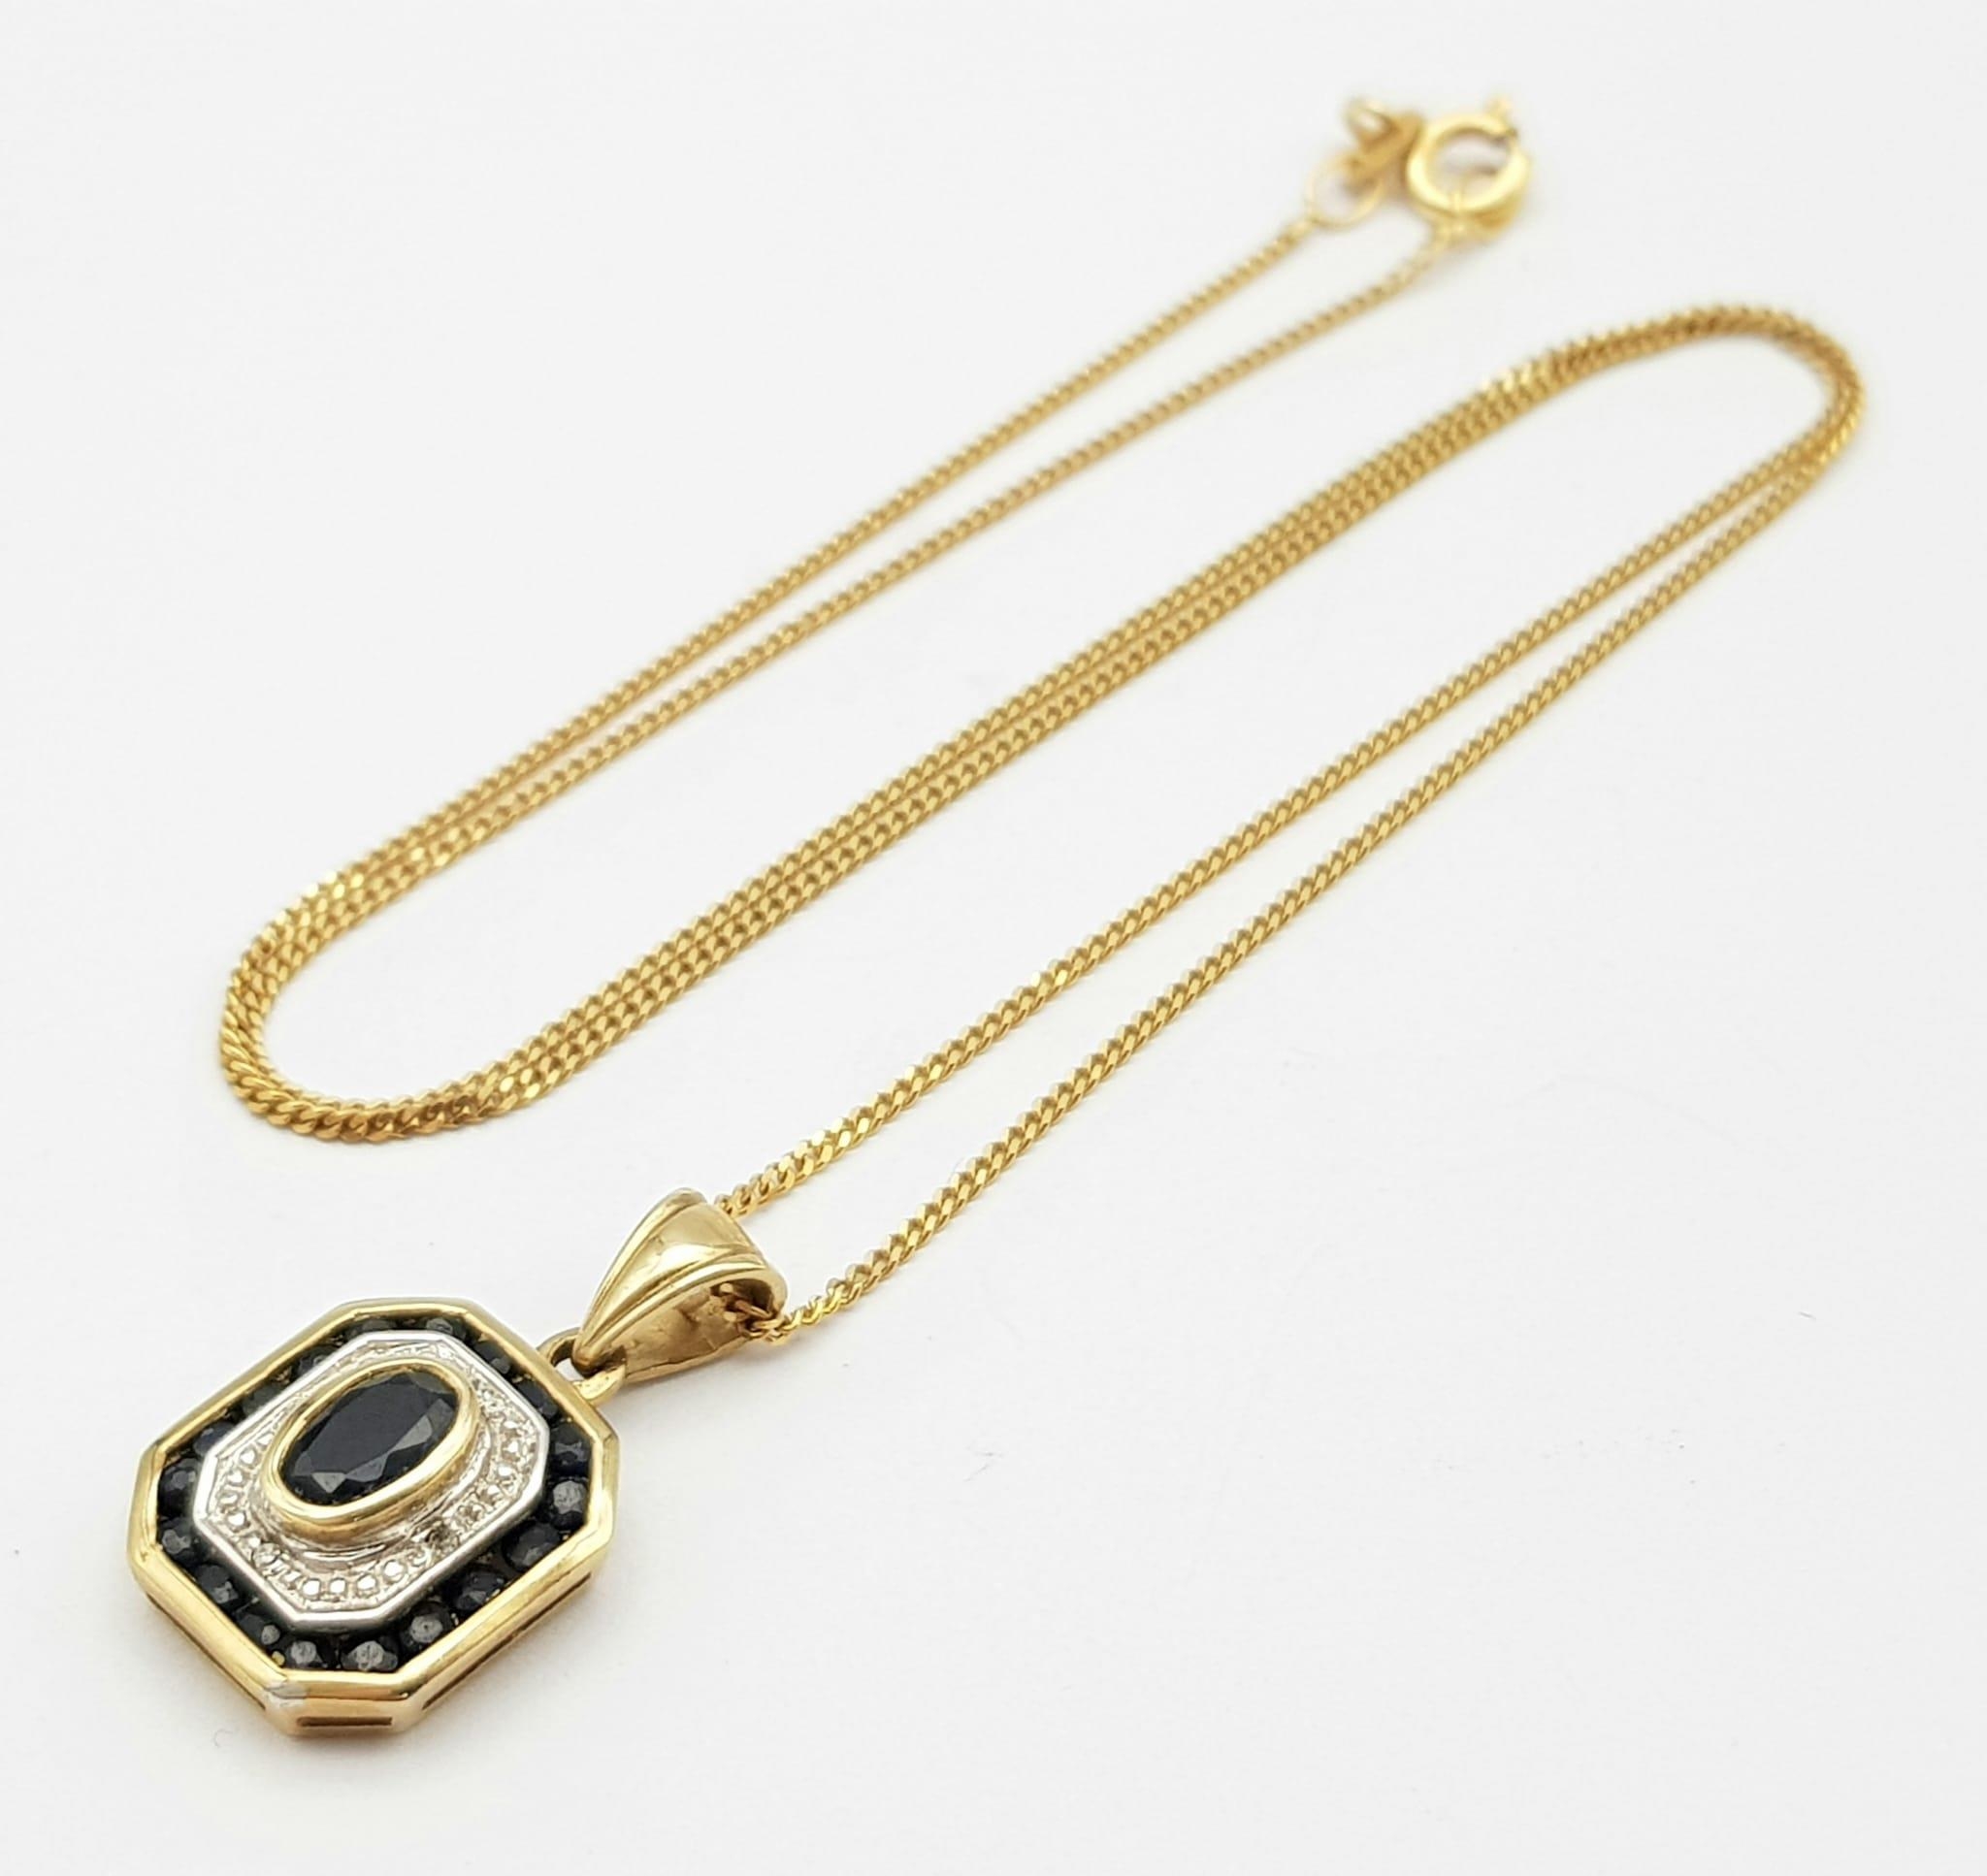 A 9K Yellow Gold Sapphire and Diamond Pendant on a 9K Yellow Gold Disappearing Necklace. Pendant -